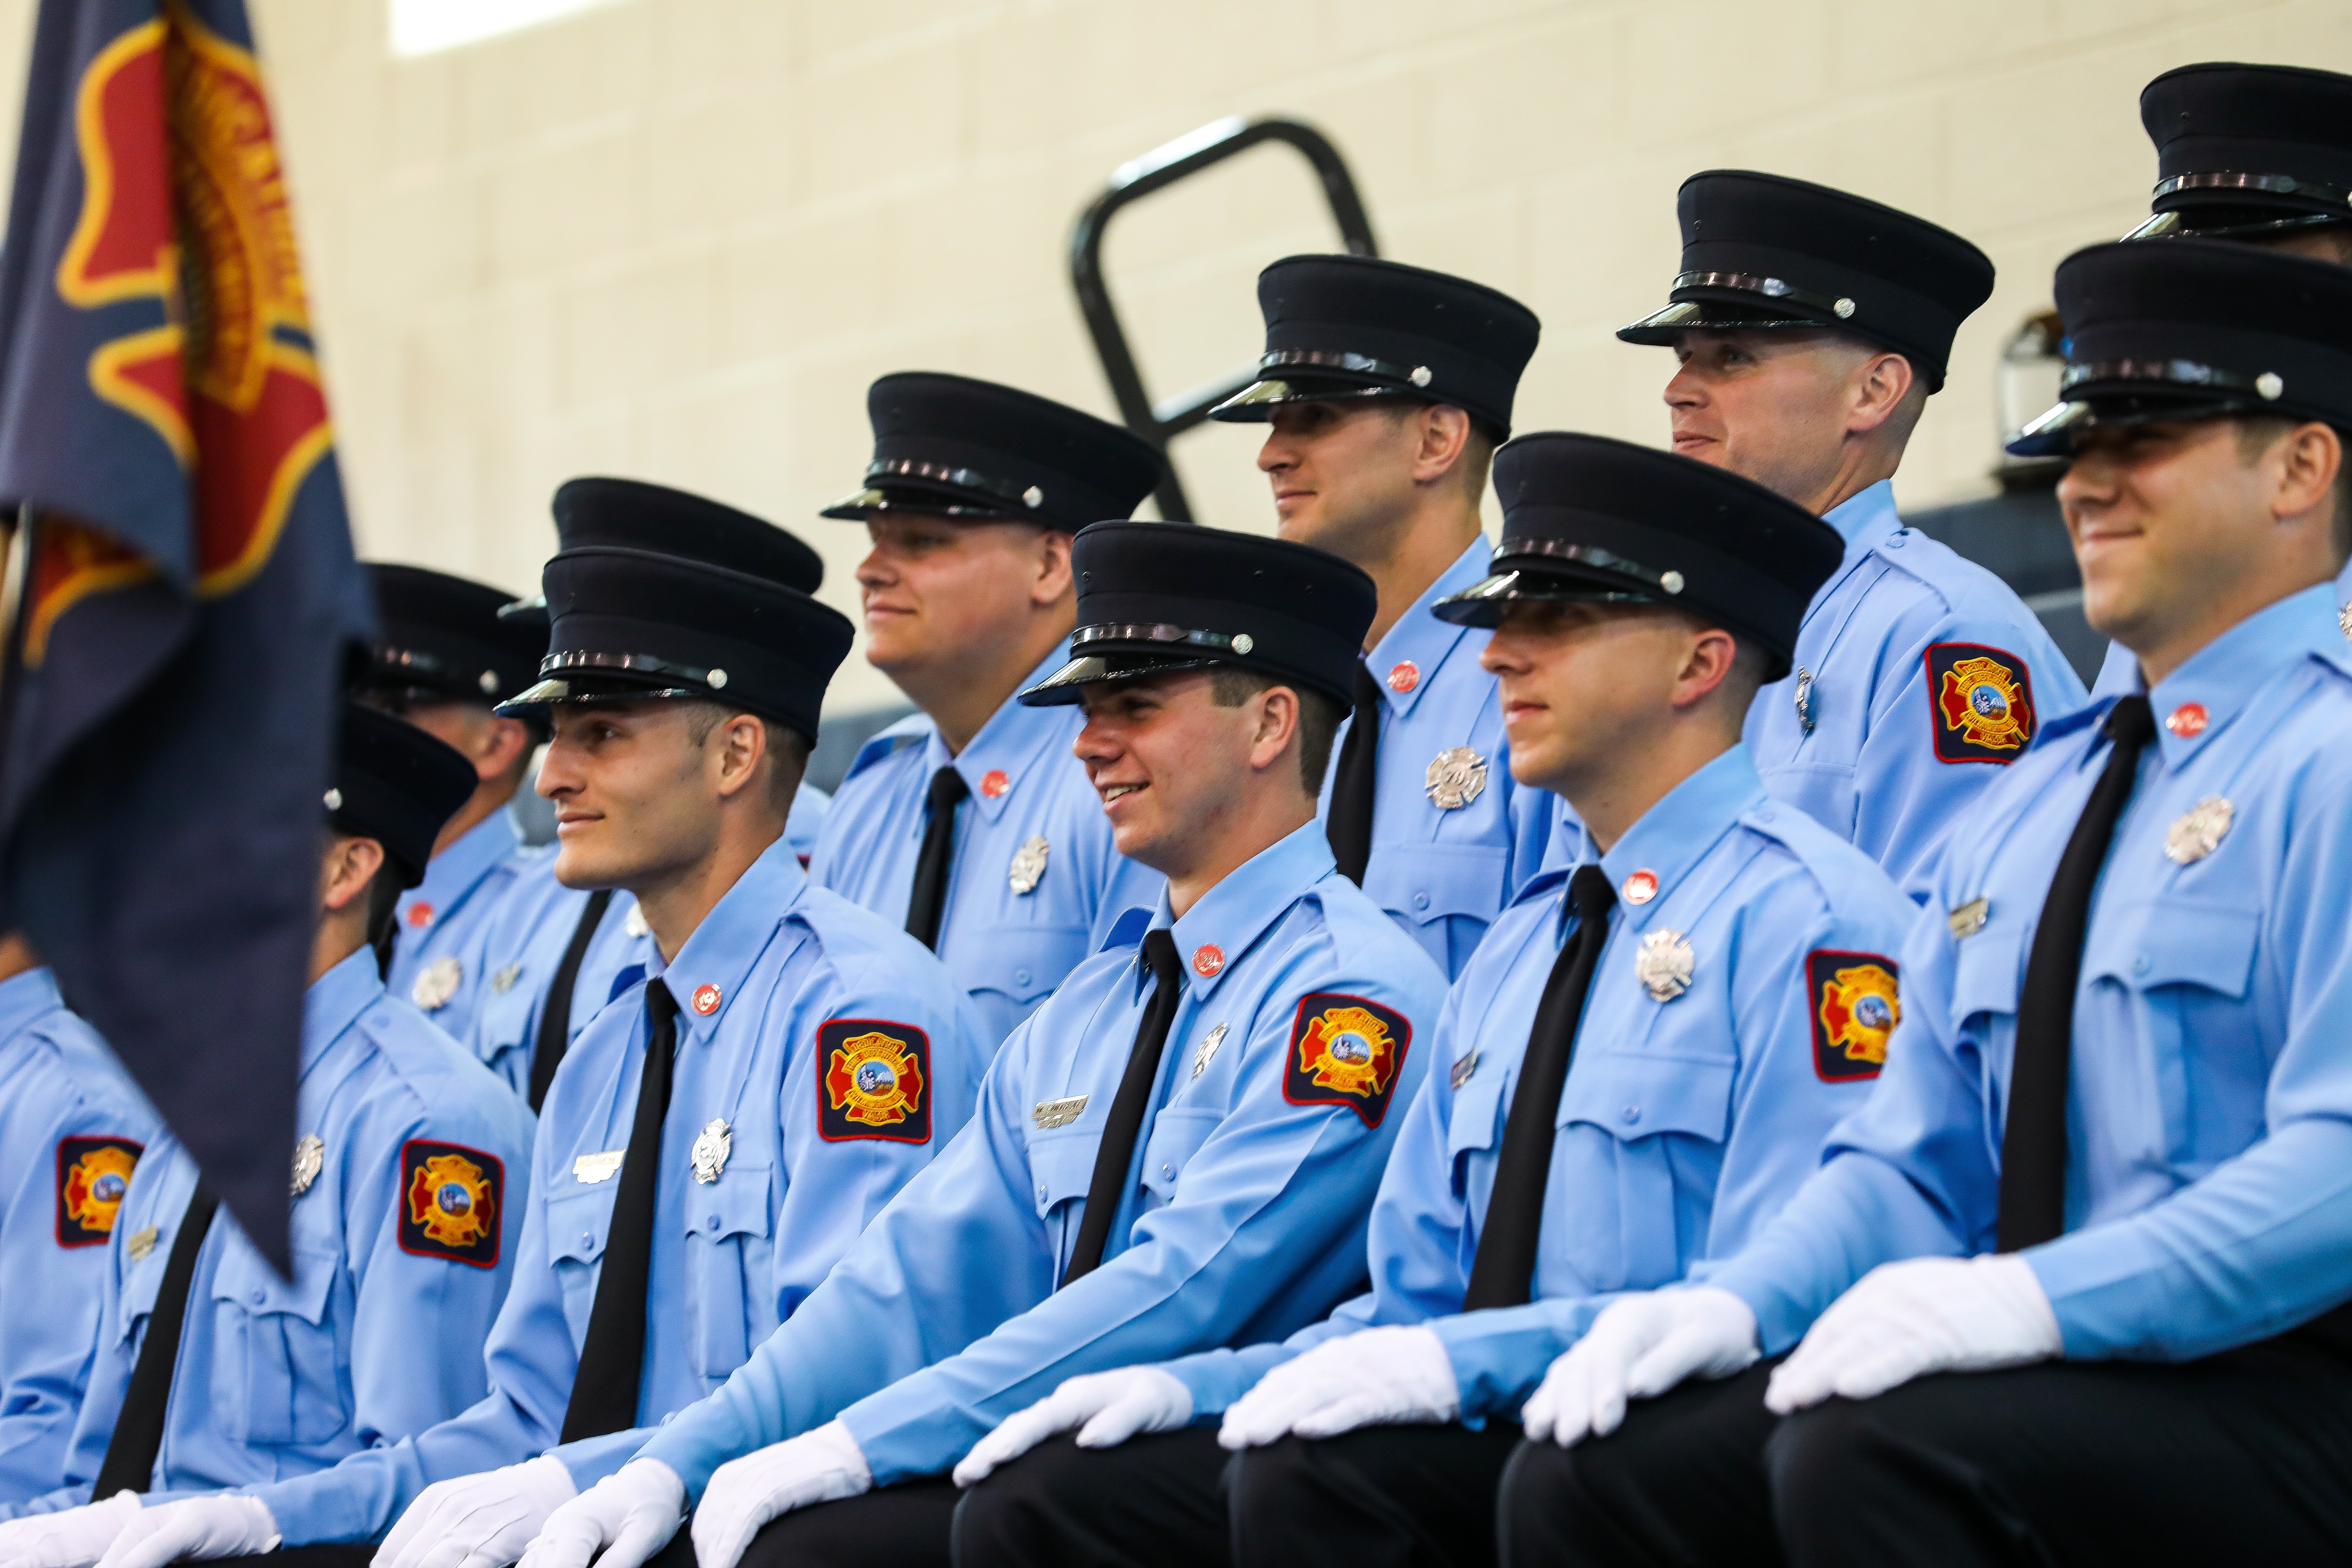 Wilmington Fire Department 40th Fire Academy Graduating class